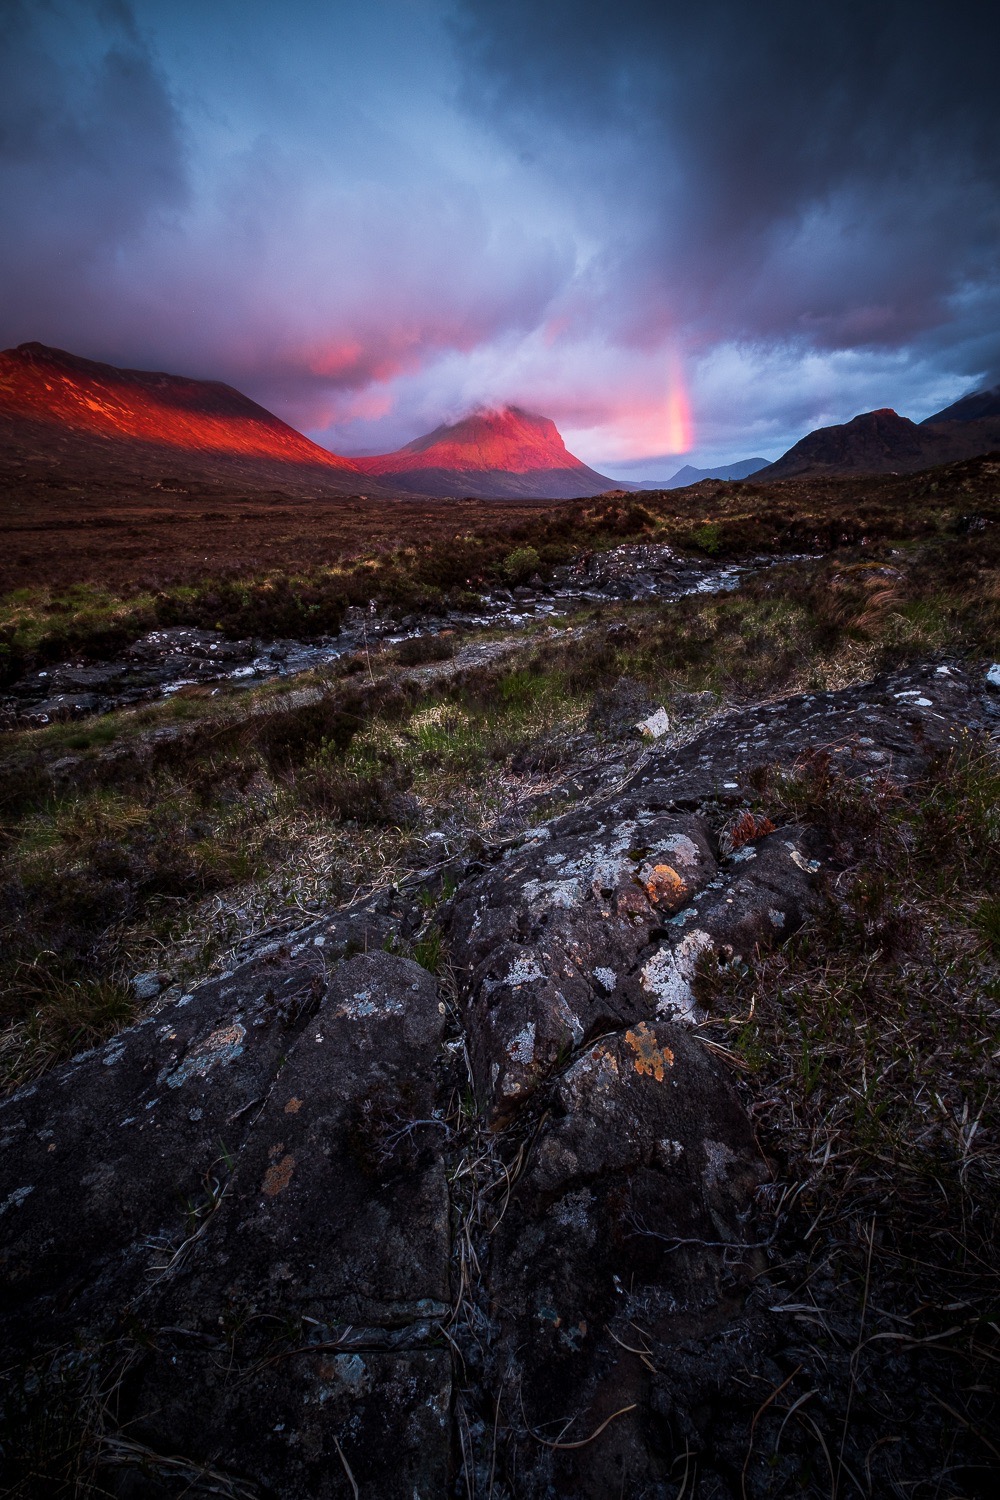 0051-scotland-tamron-le monde de la photo-paysage-20190509221357-compress.jpg